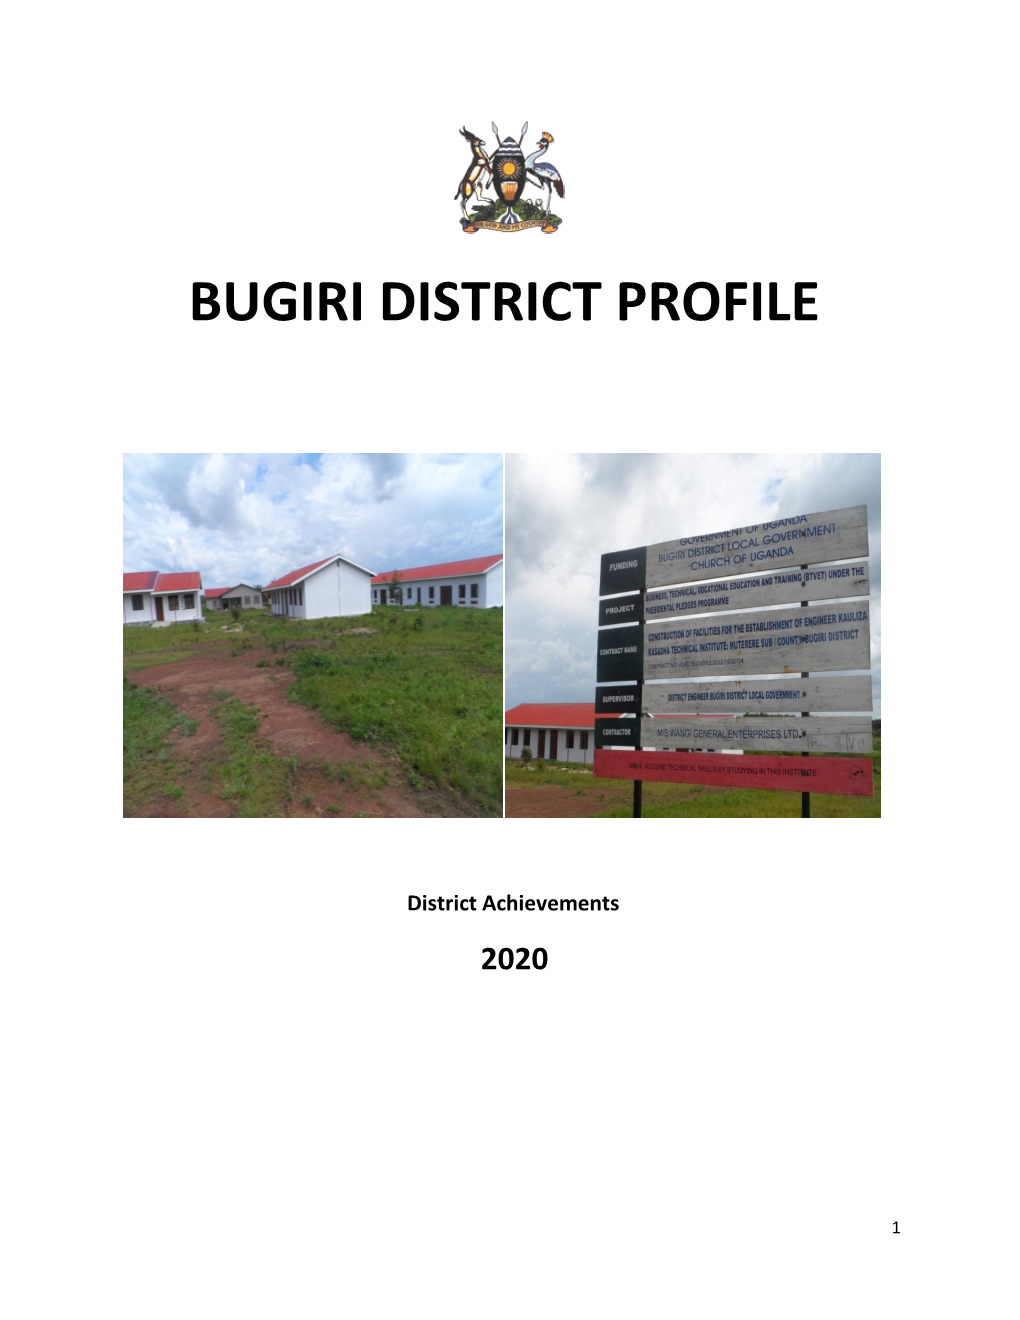 Bugiri District Profile